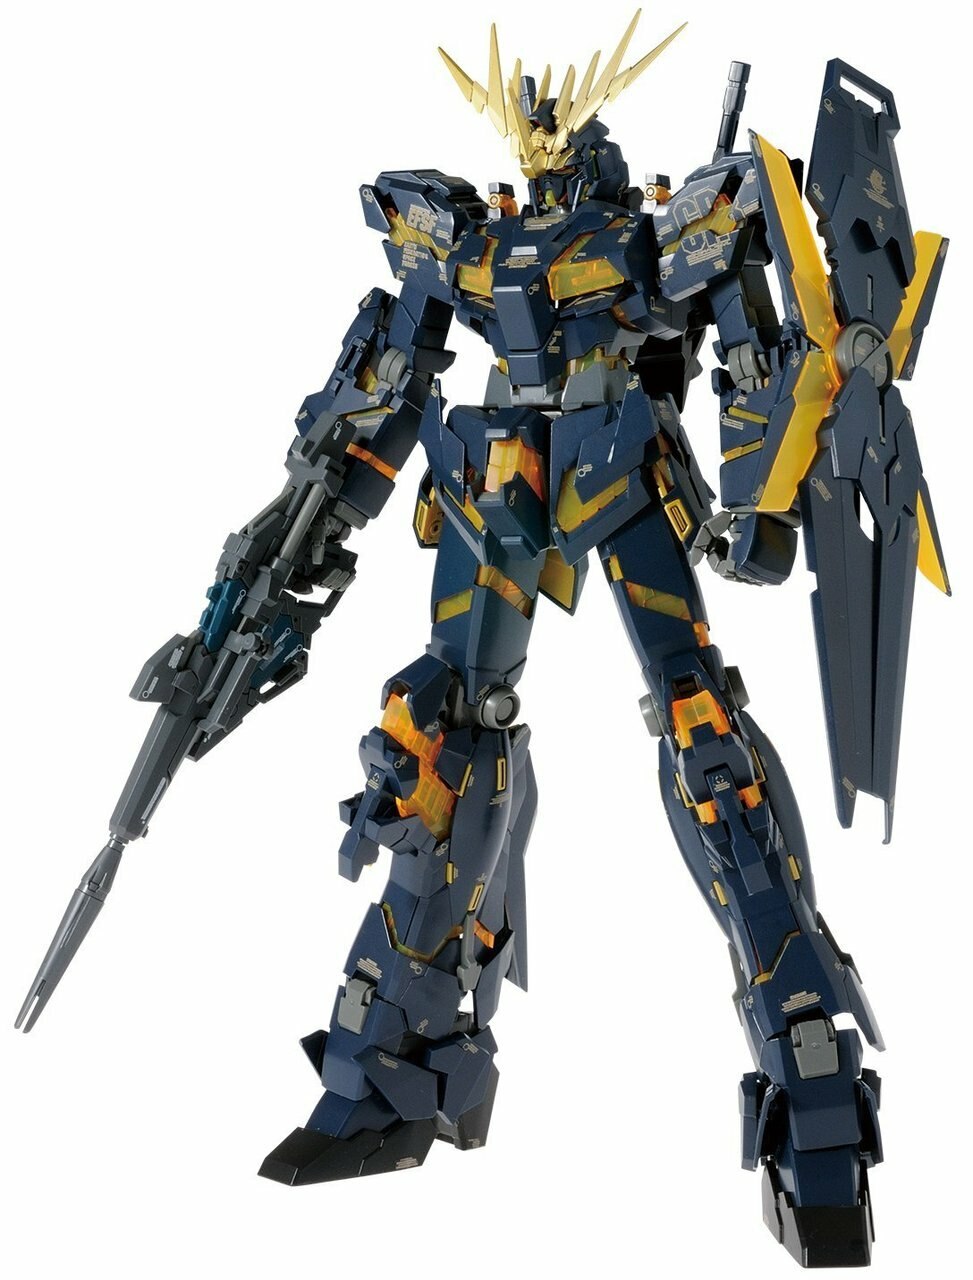 GUNDAM - MG 1/100 - Unicorn Gundam 02 Banshee Vers. Ka